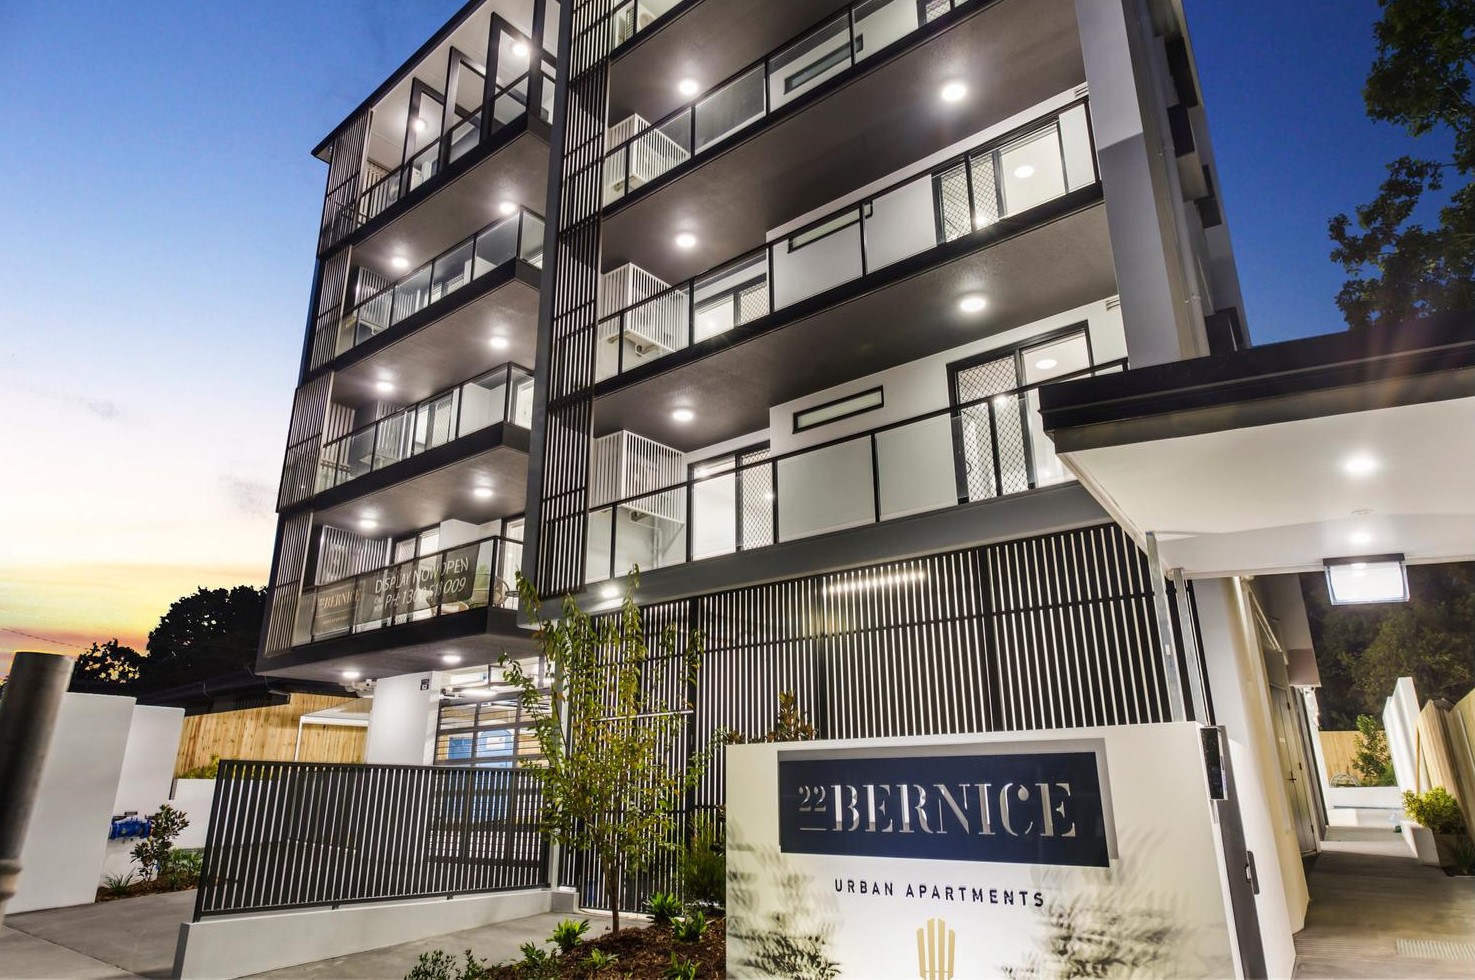 Residential - Bernice Apartments